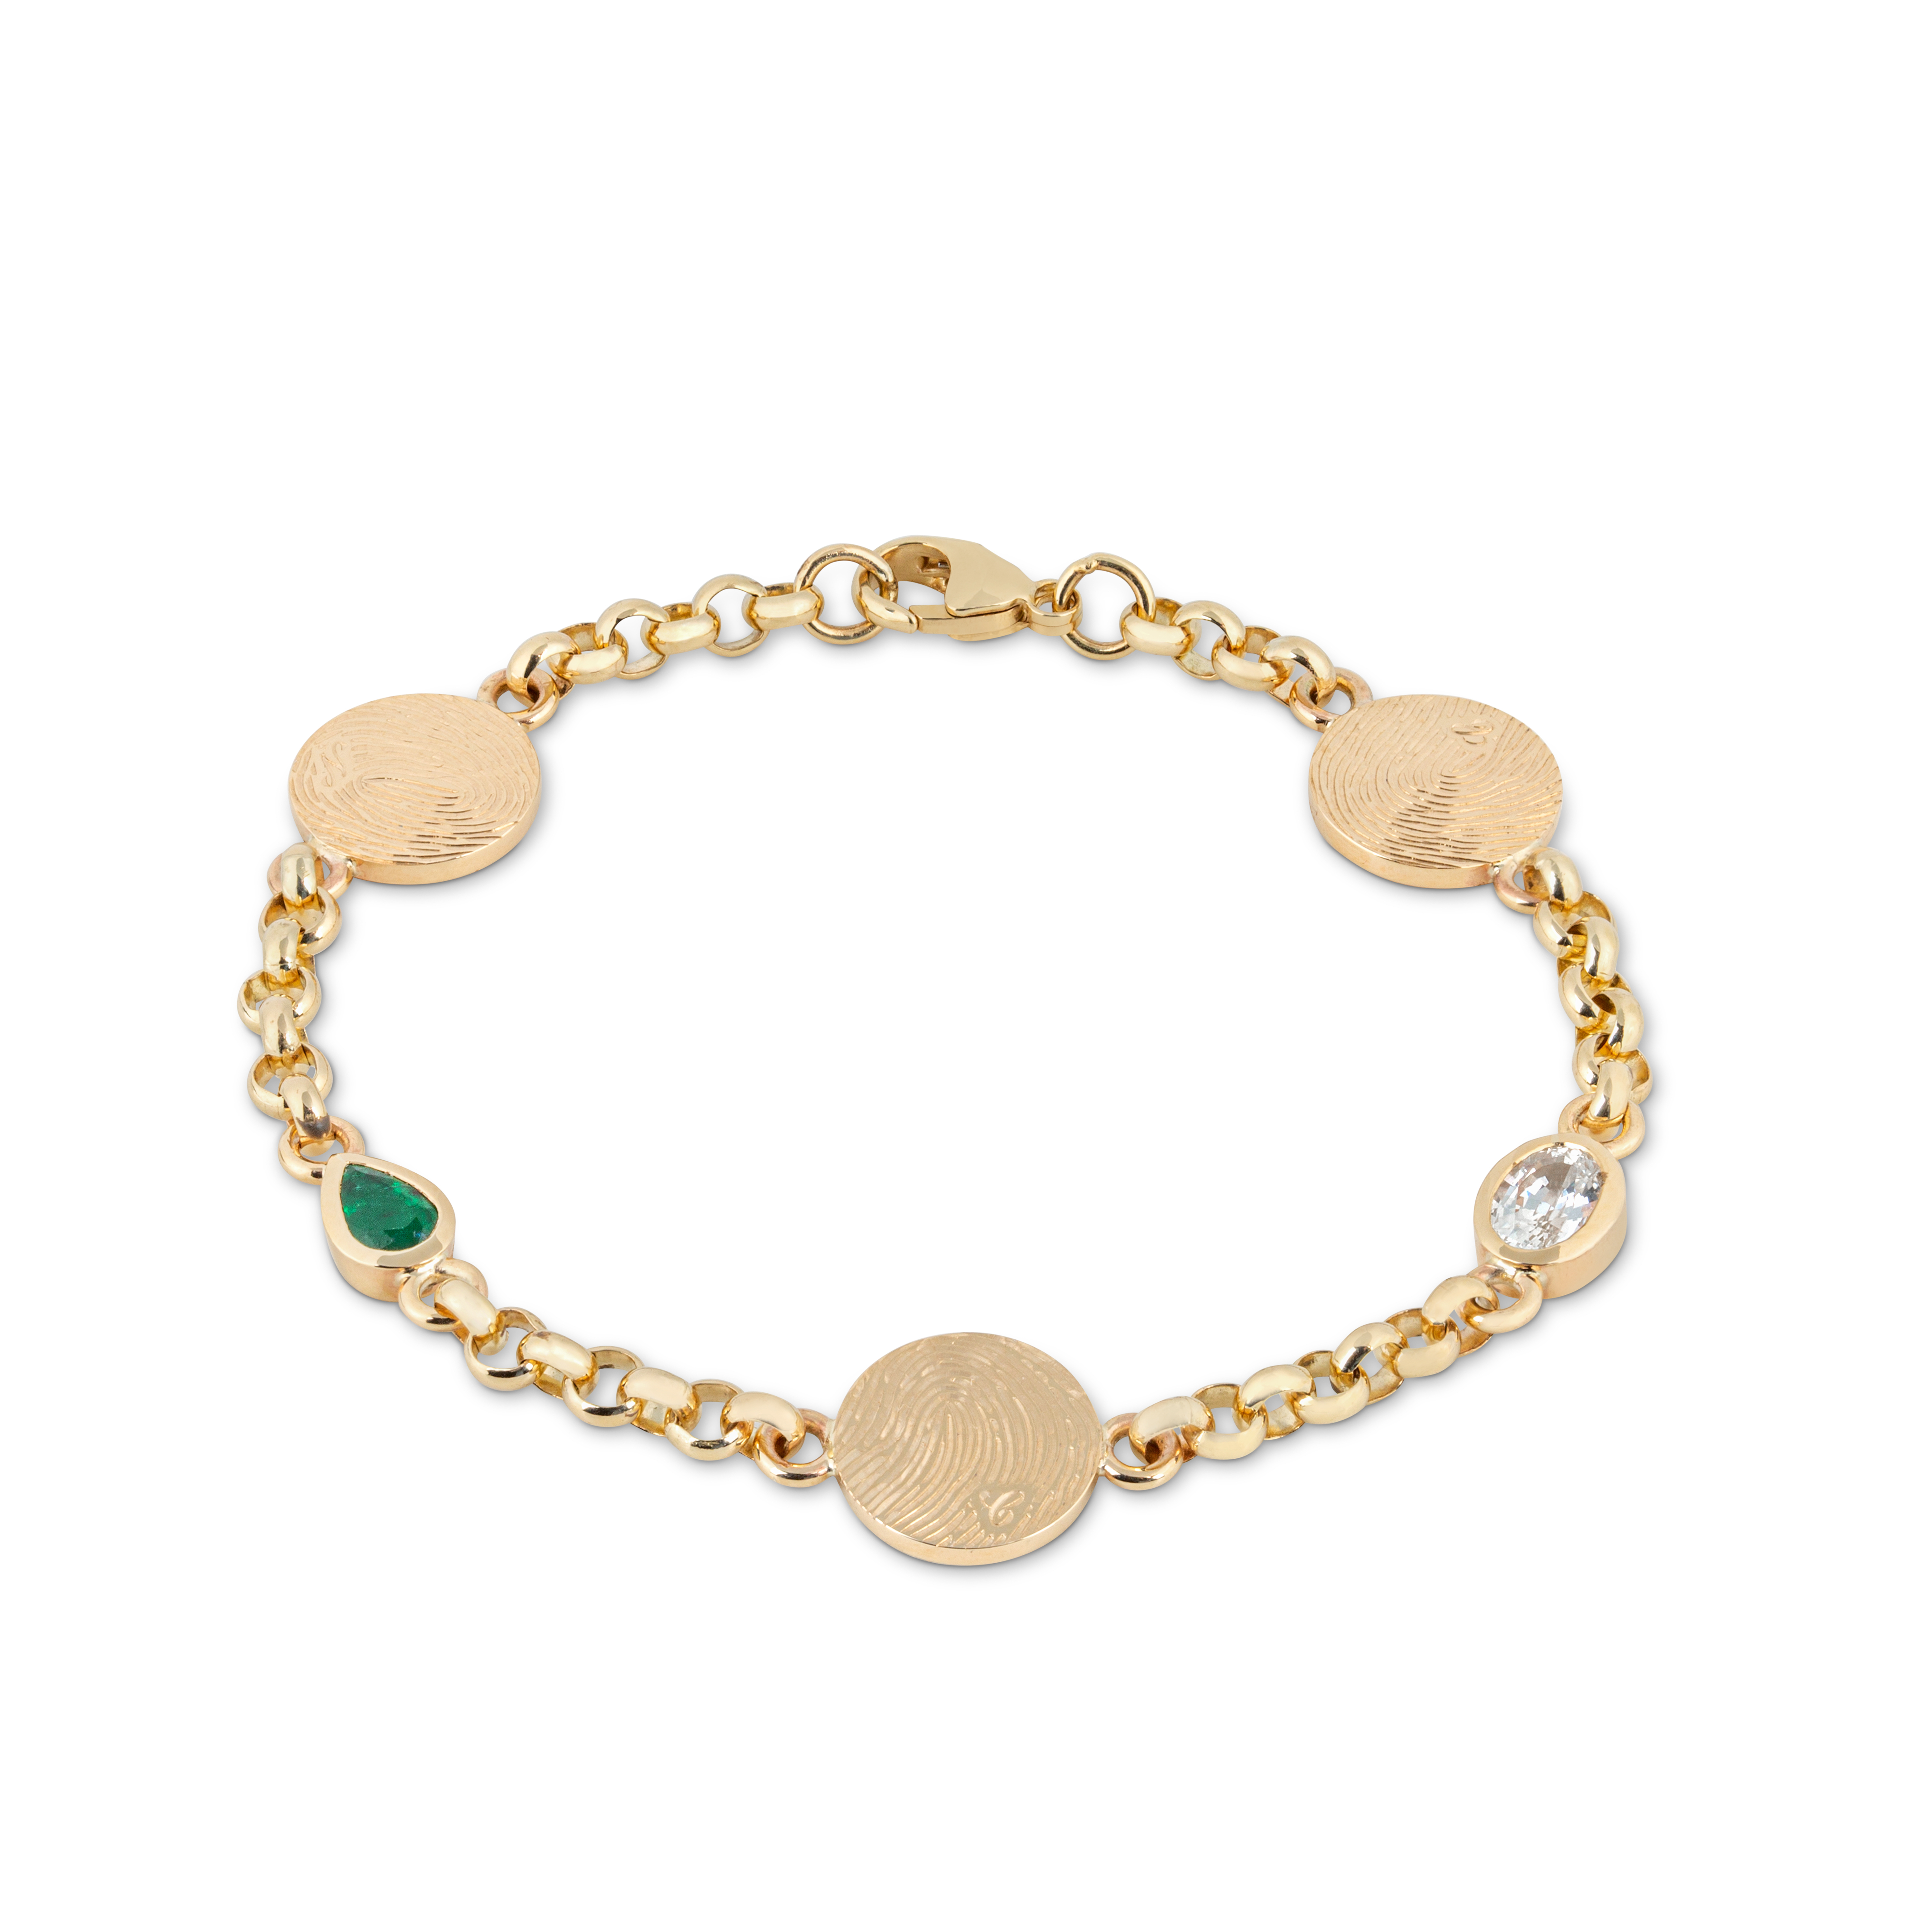 Bespoke birthstone and charm bracelets